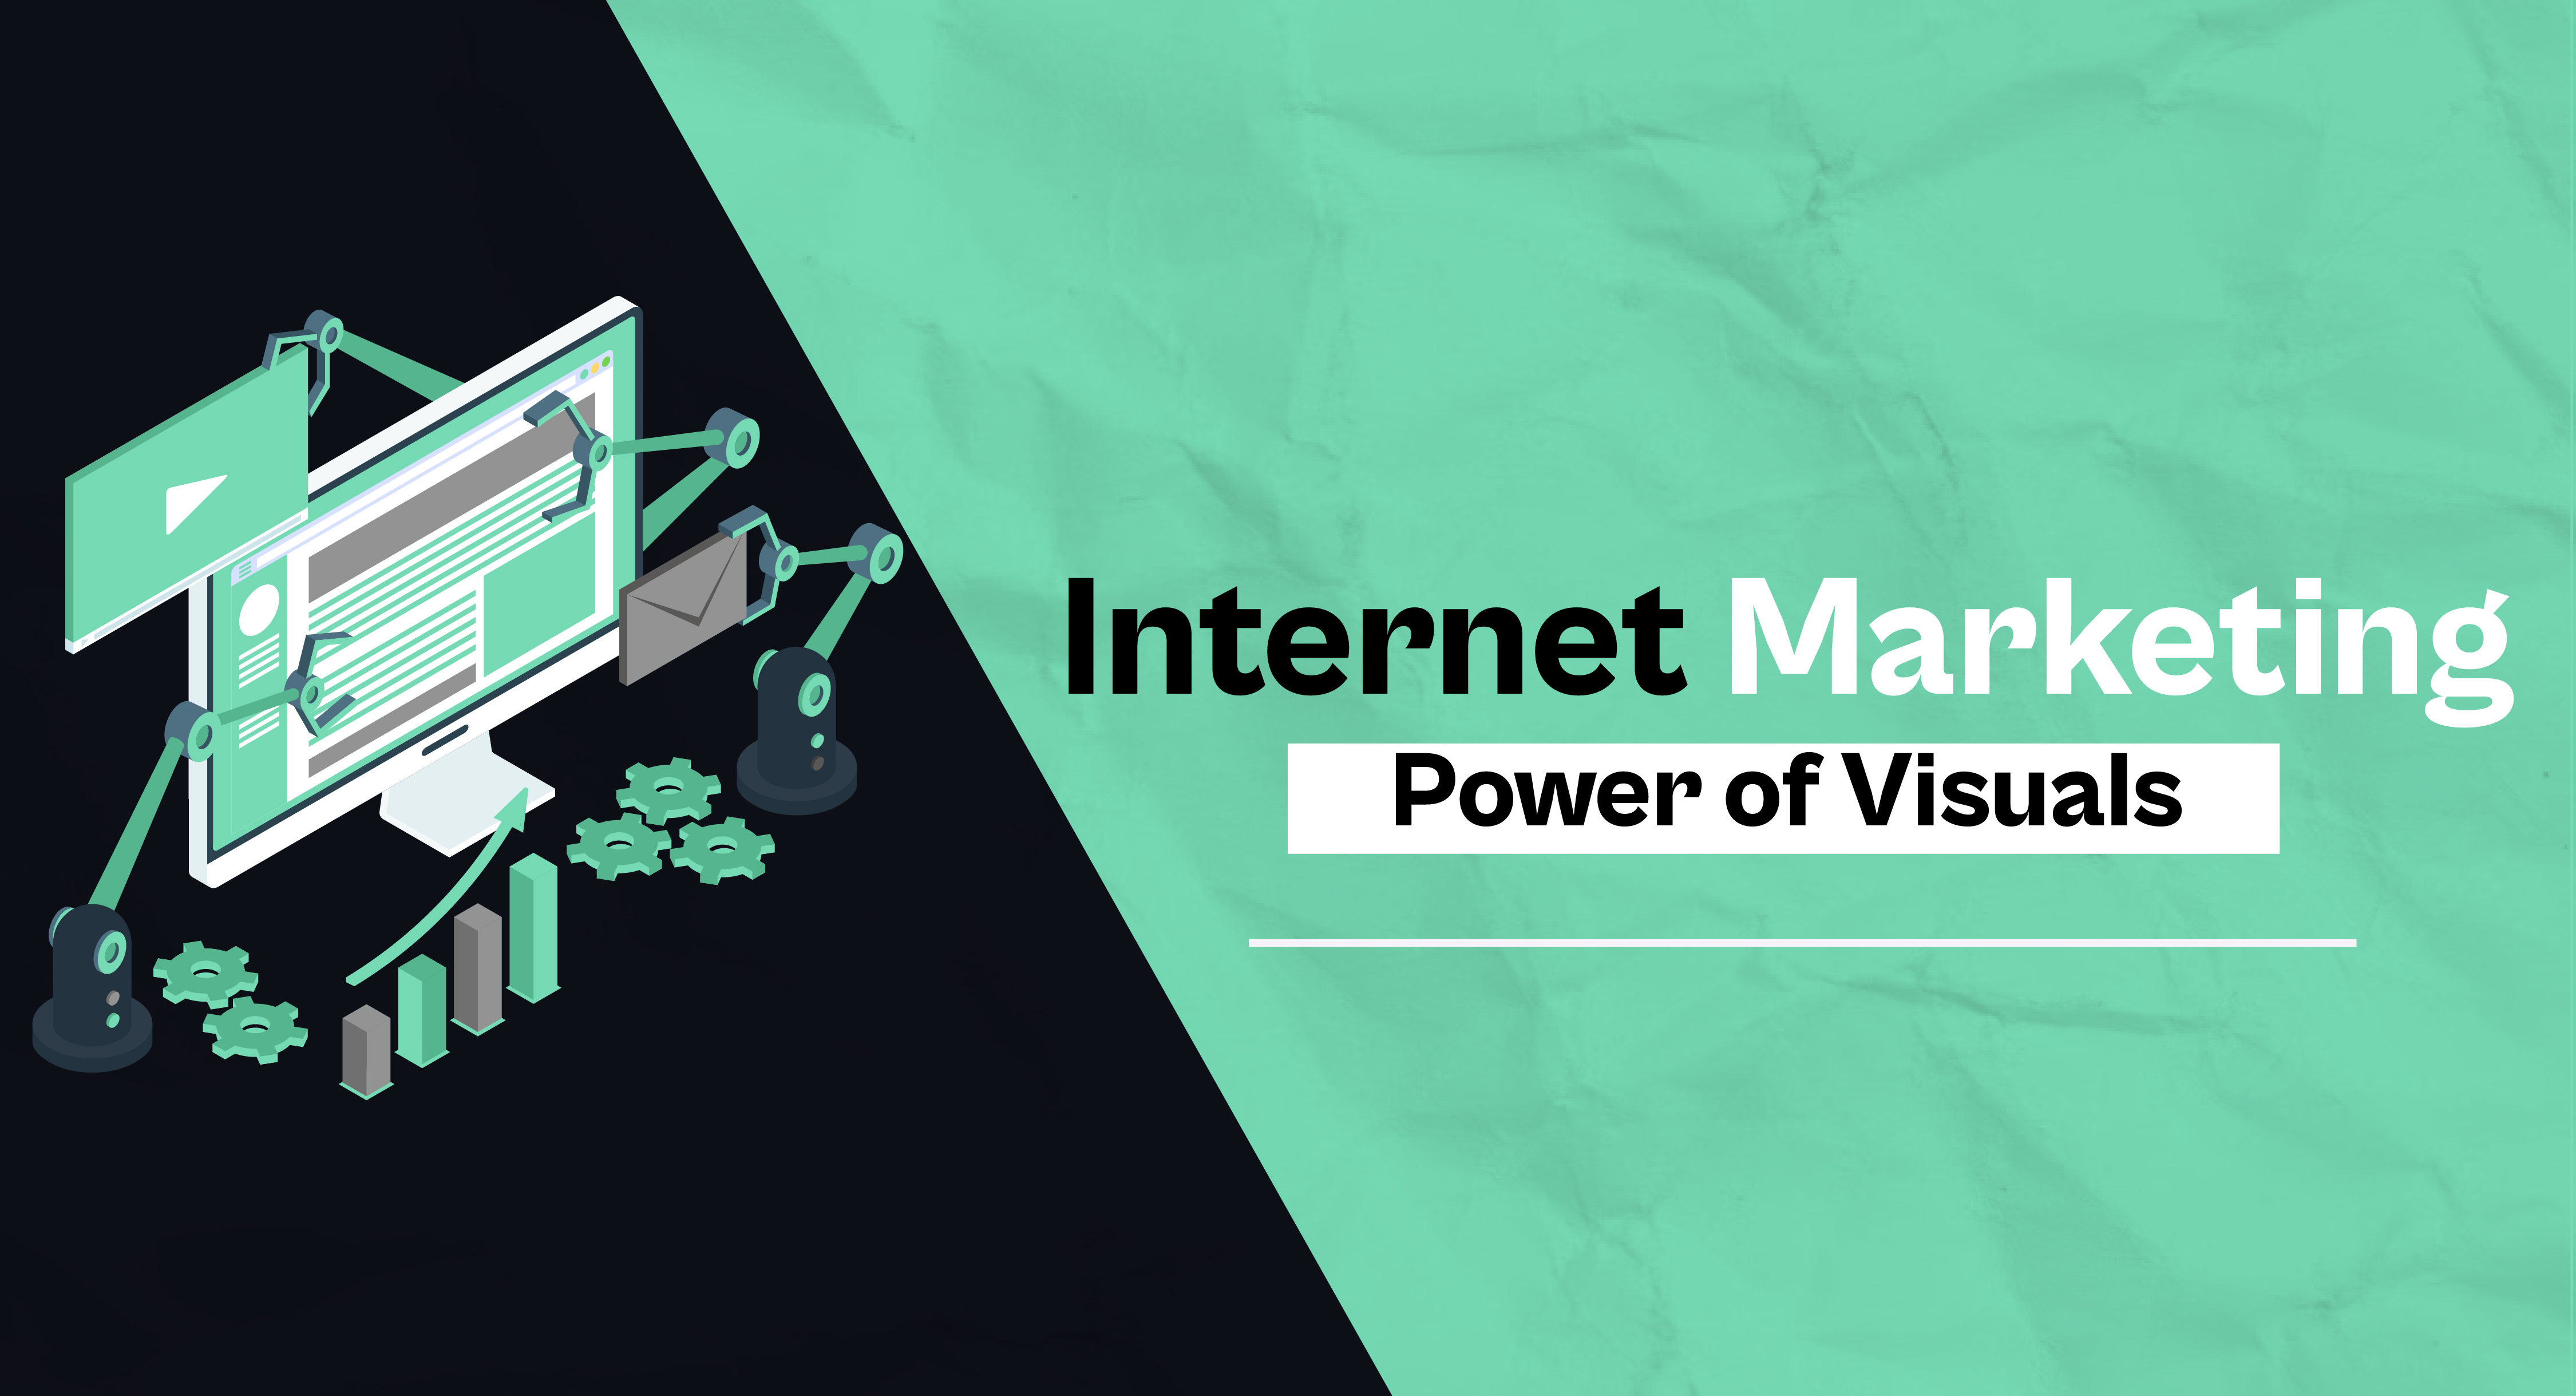 Internet Marketing: Power of Visuals